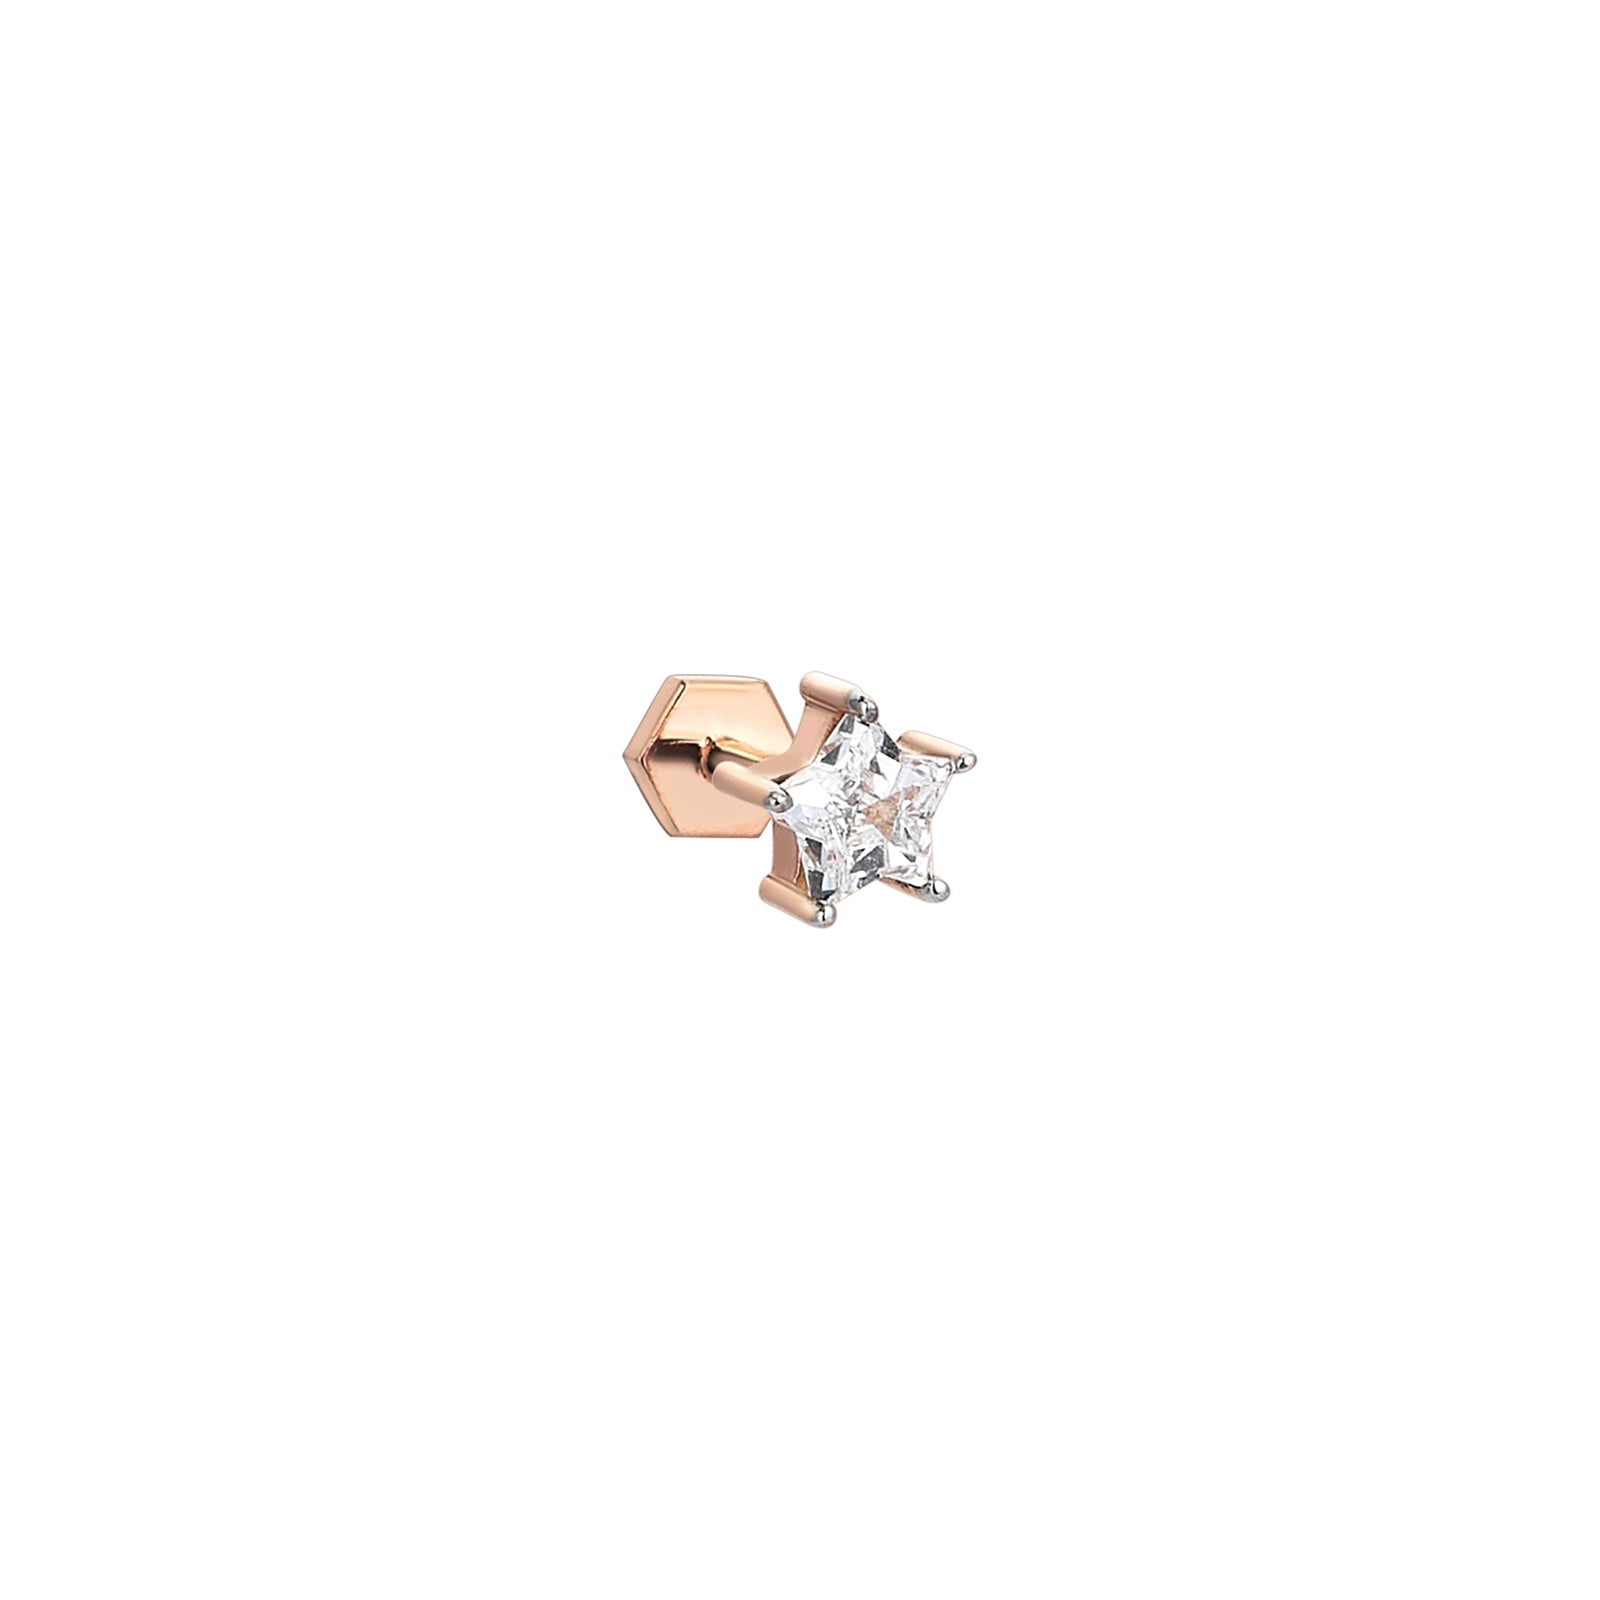 Stellina Piercing Roslow Gold / Star White Diamond / 5 mm